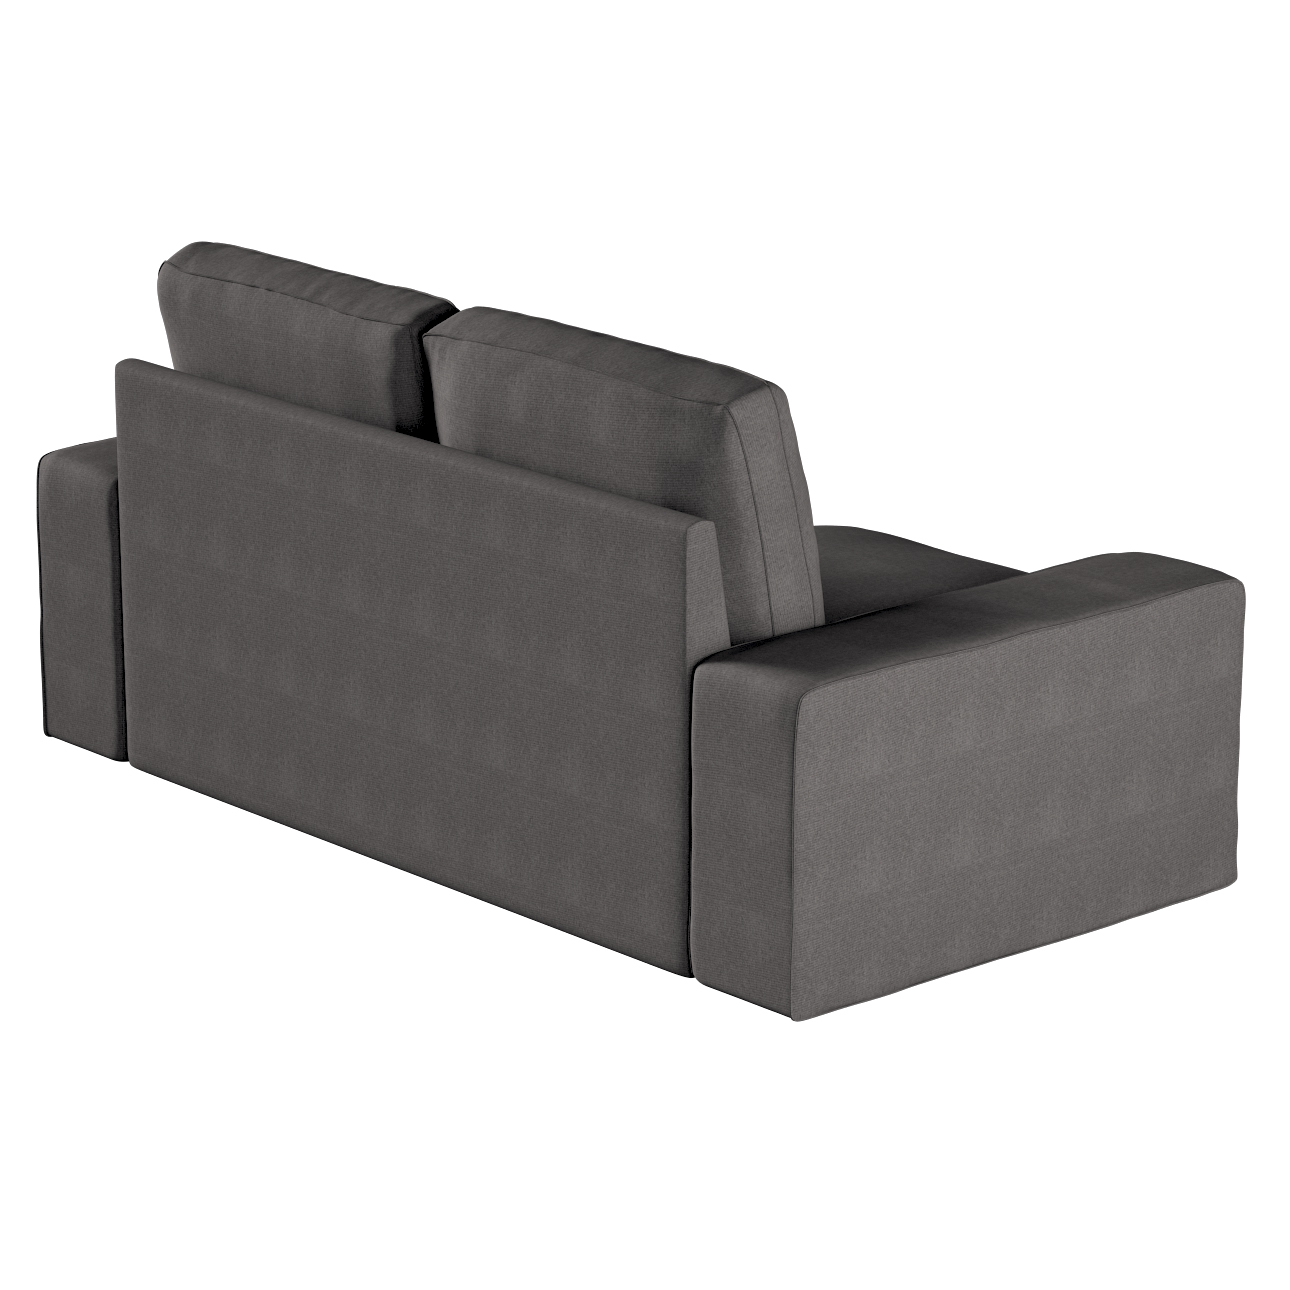 Bezug für Kivik 2-Sitzer Sofa, dunkelgrau, Bezug für Sofa Kivik 2-Sitzer, E günstig online kaufen